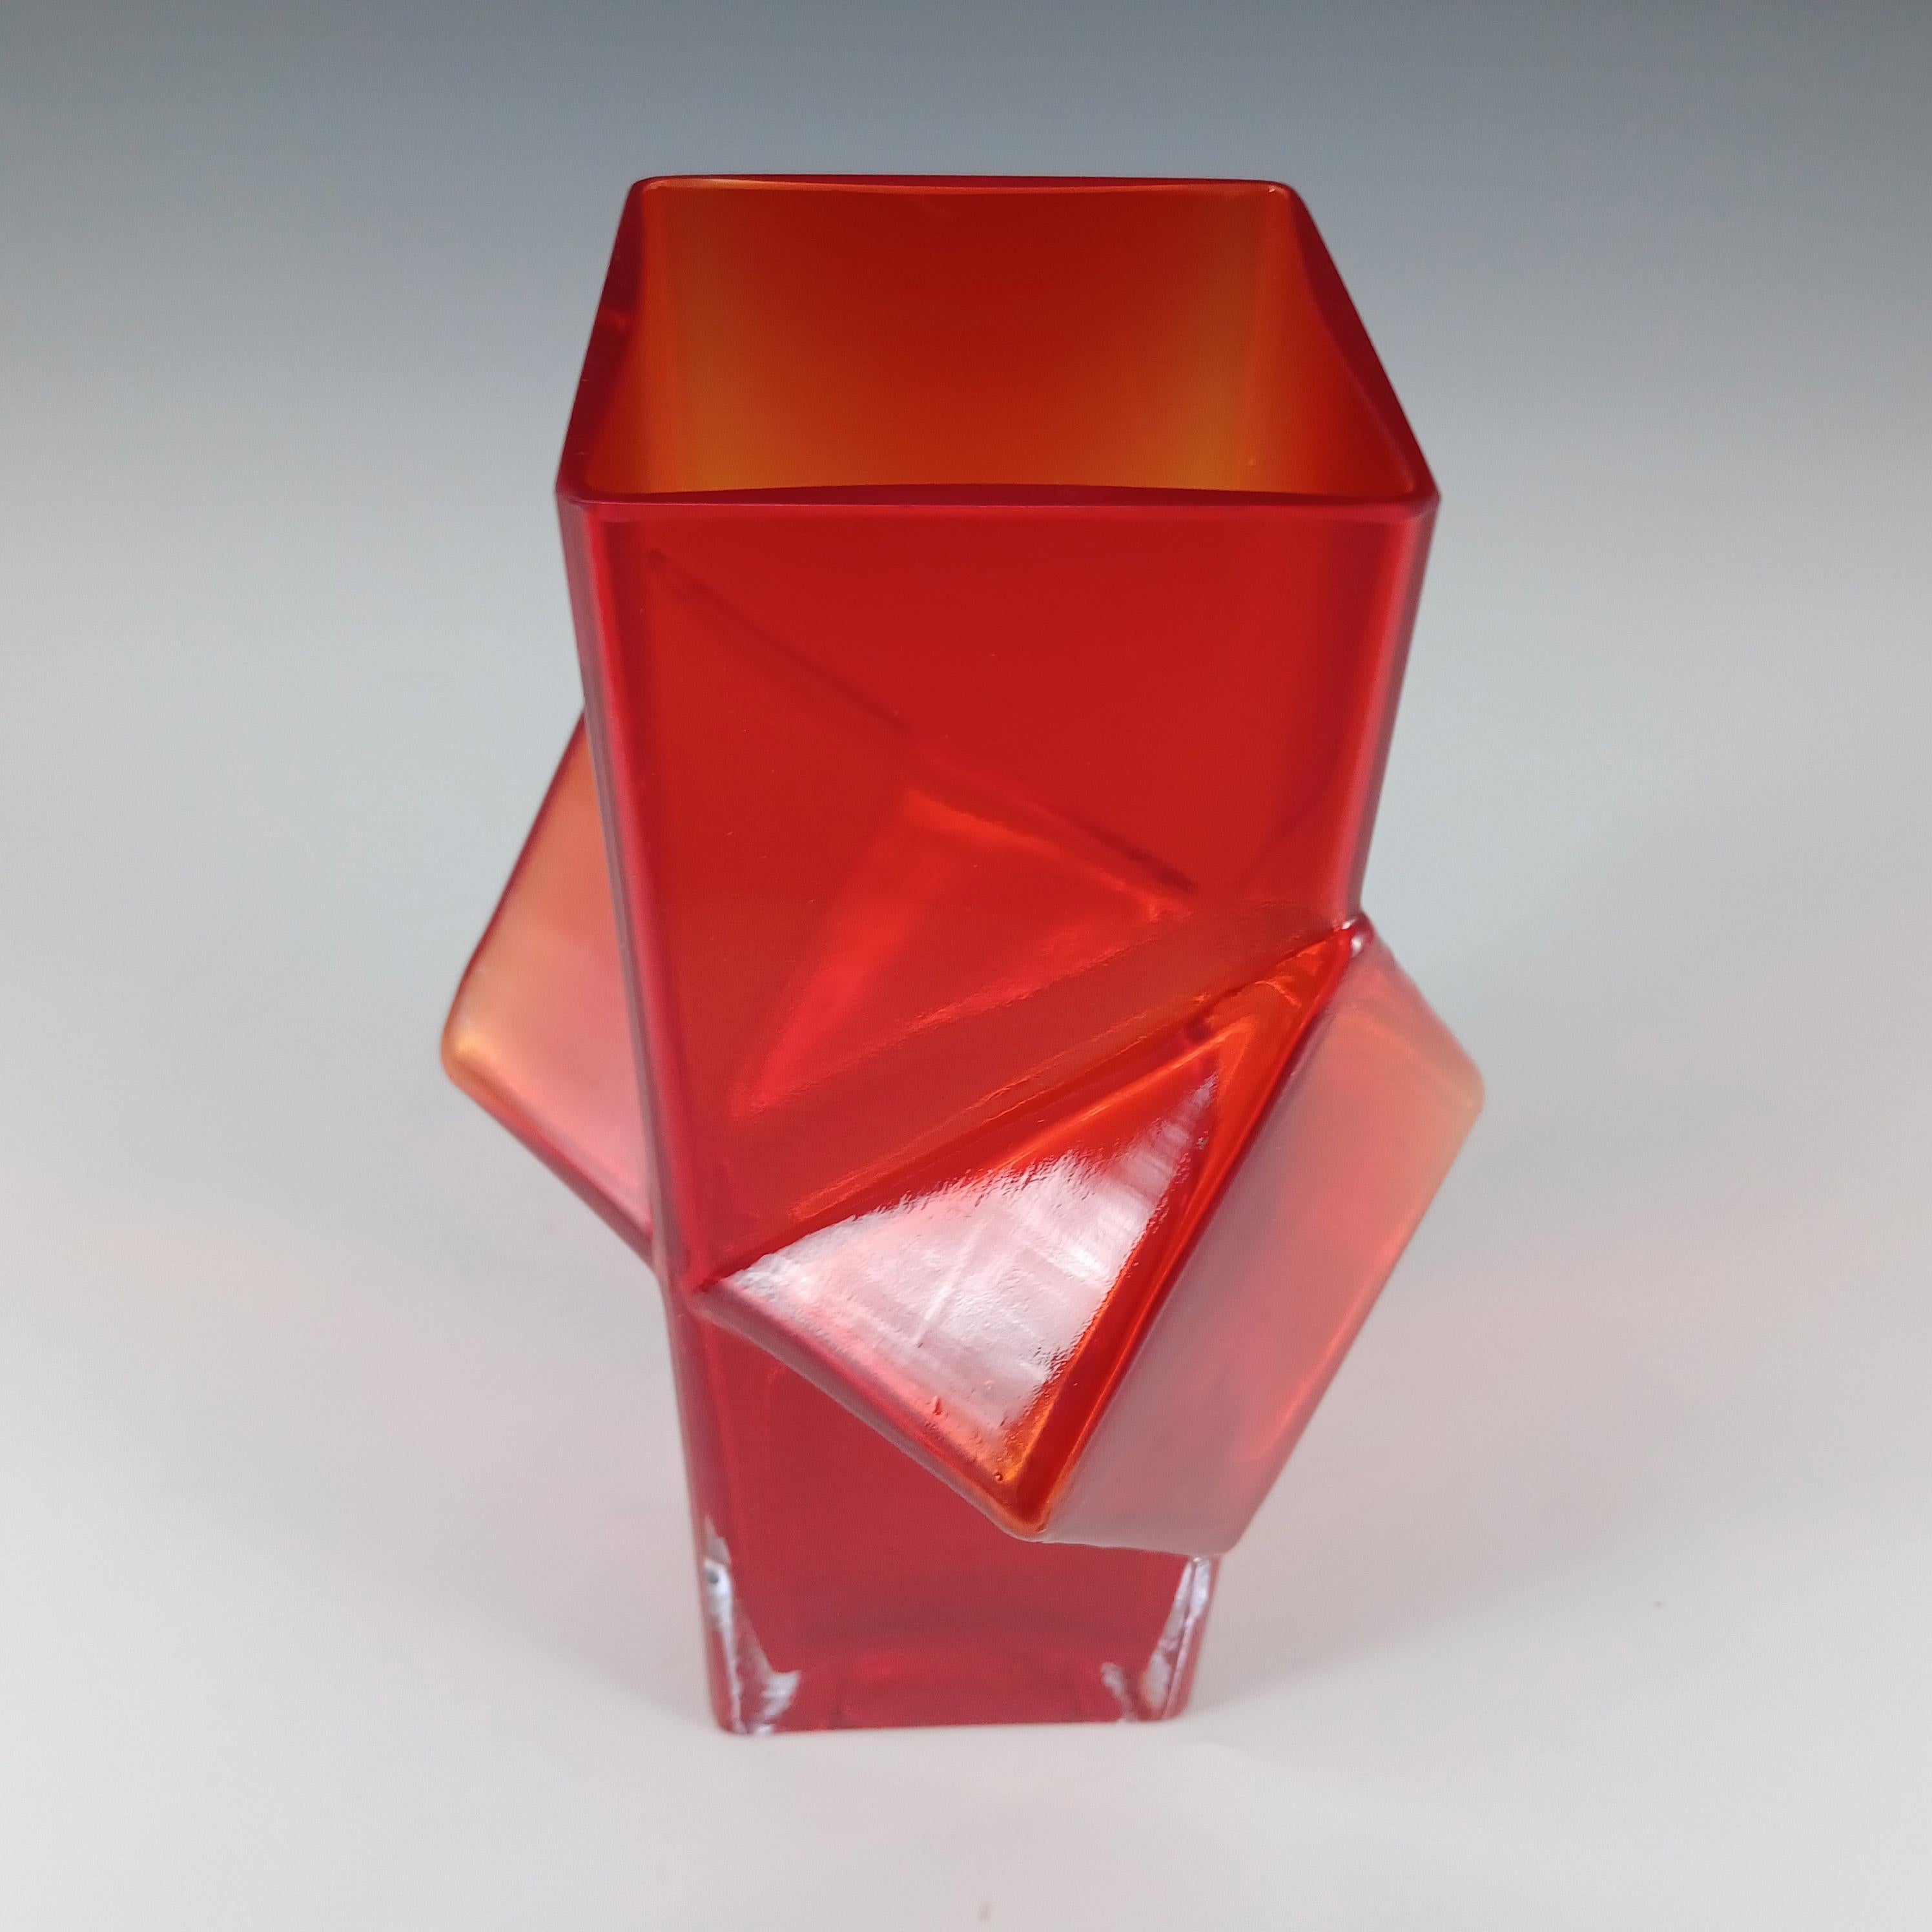 Hand-Crafted Riihimaki #1388 Erkkitapio Siiroinen Red Glass Pablo Vase For Sale